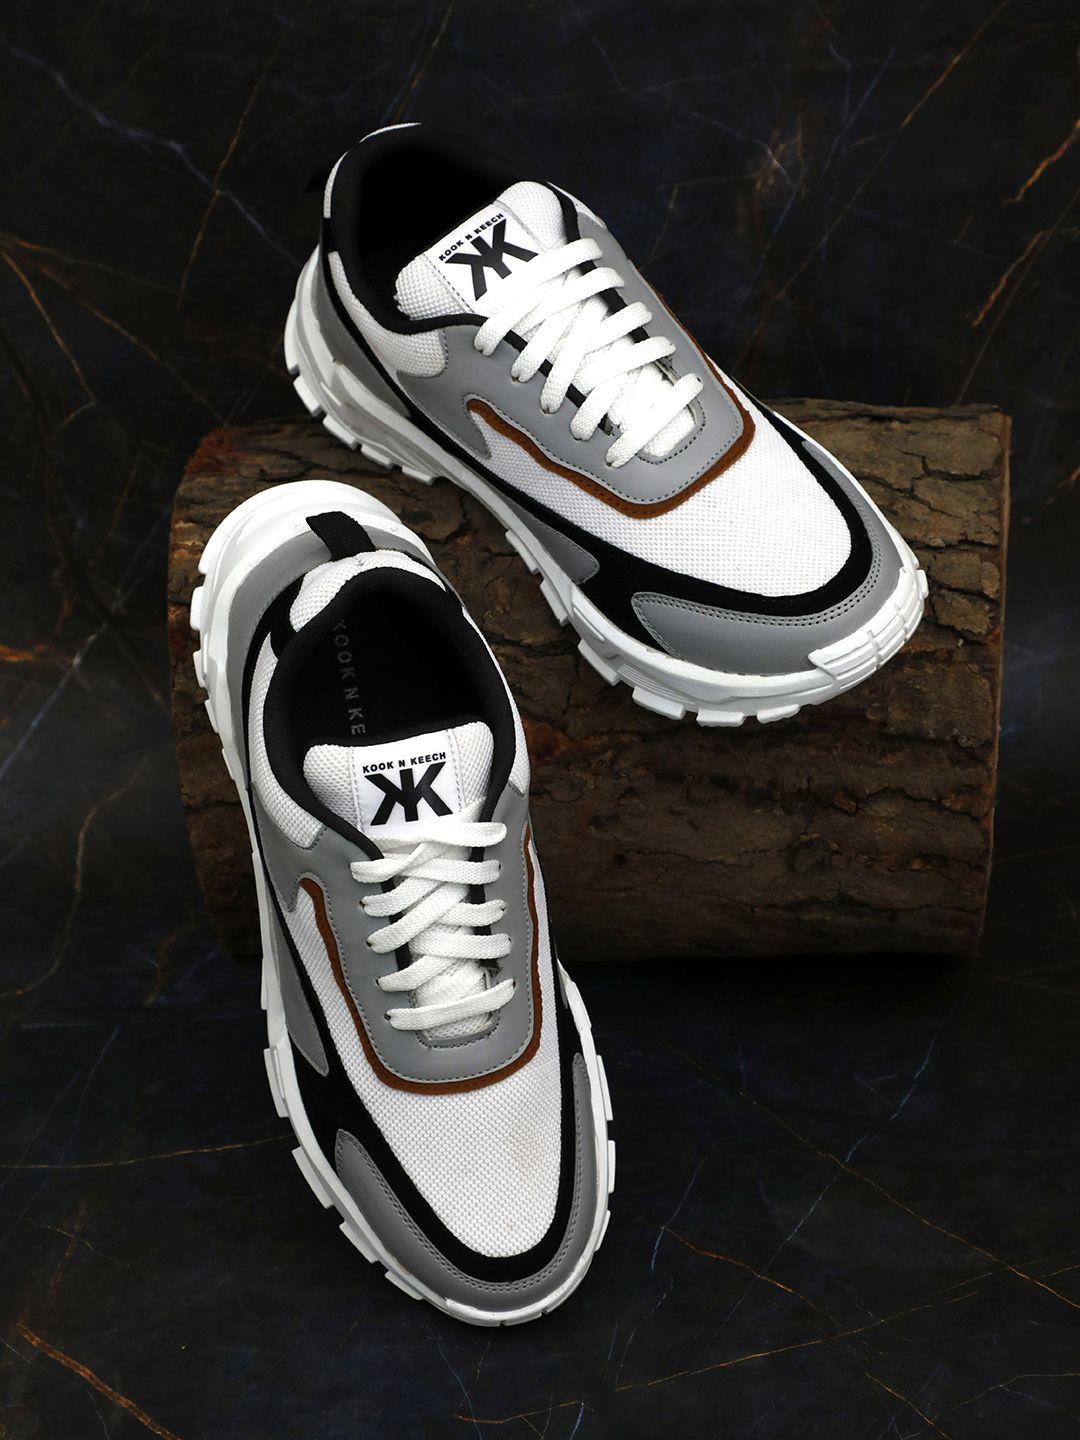 kook-n-keech-men-white-&-grey-woven-design-&-colourblocked-sneakers